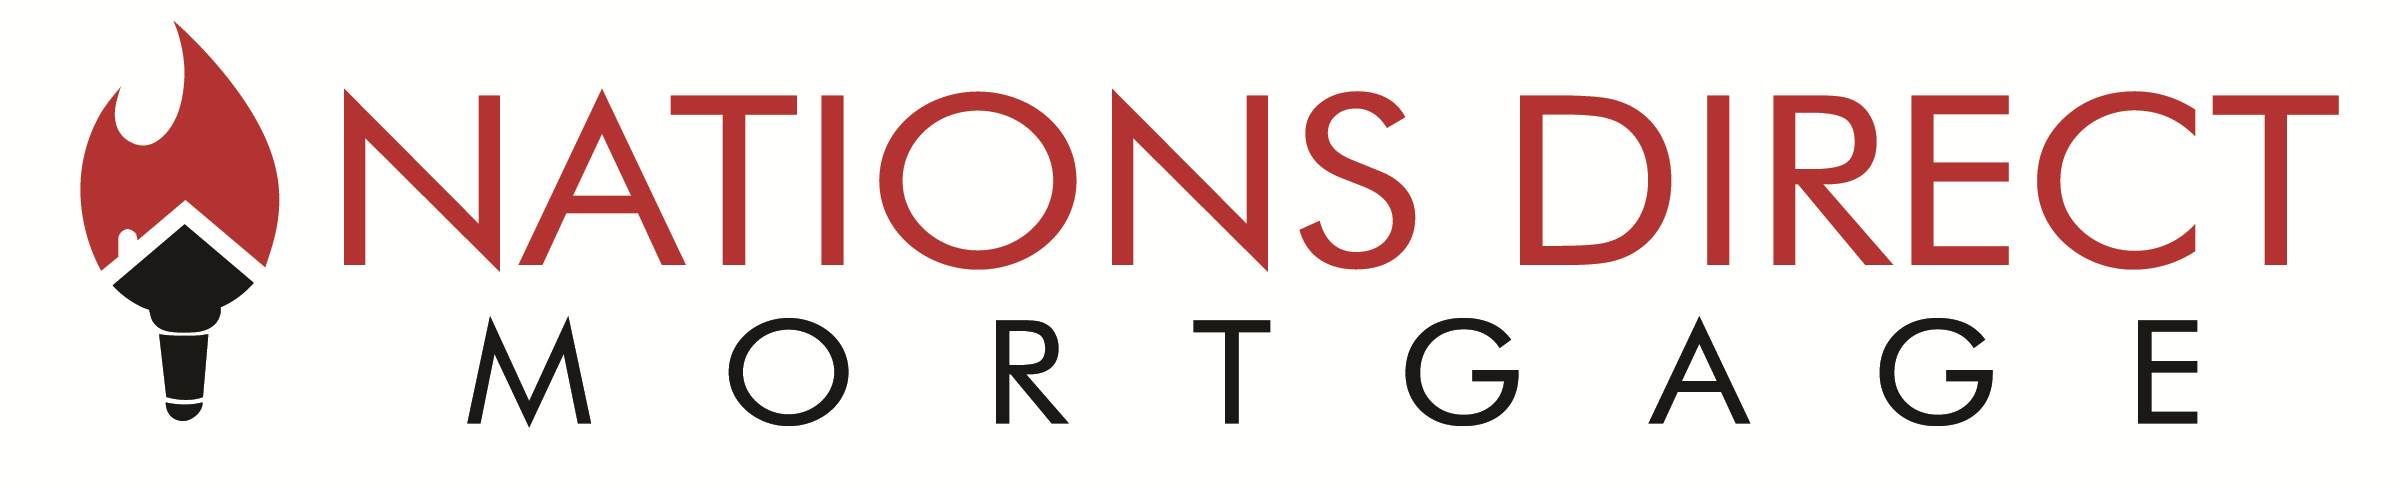 Nations Direct Mortgage, LLC logo